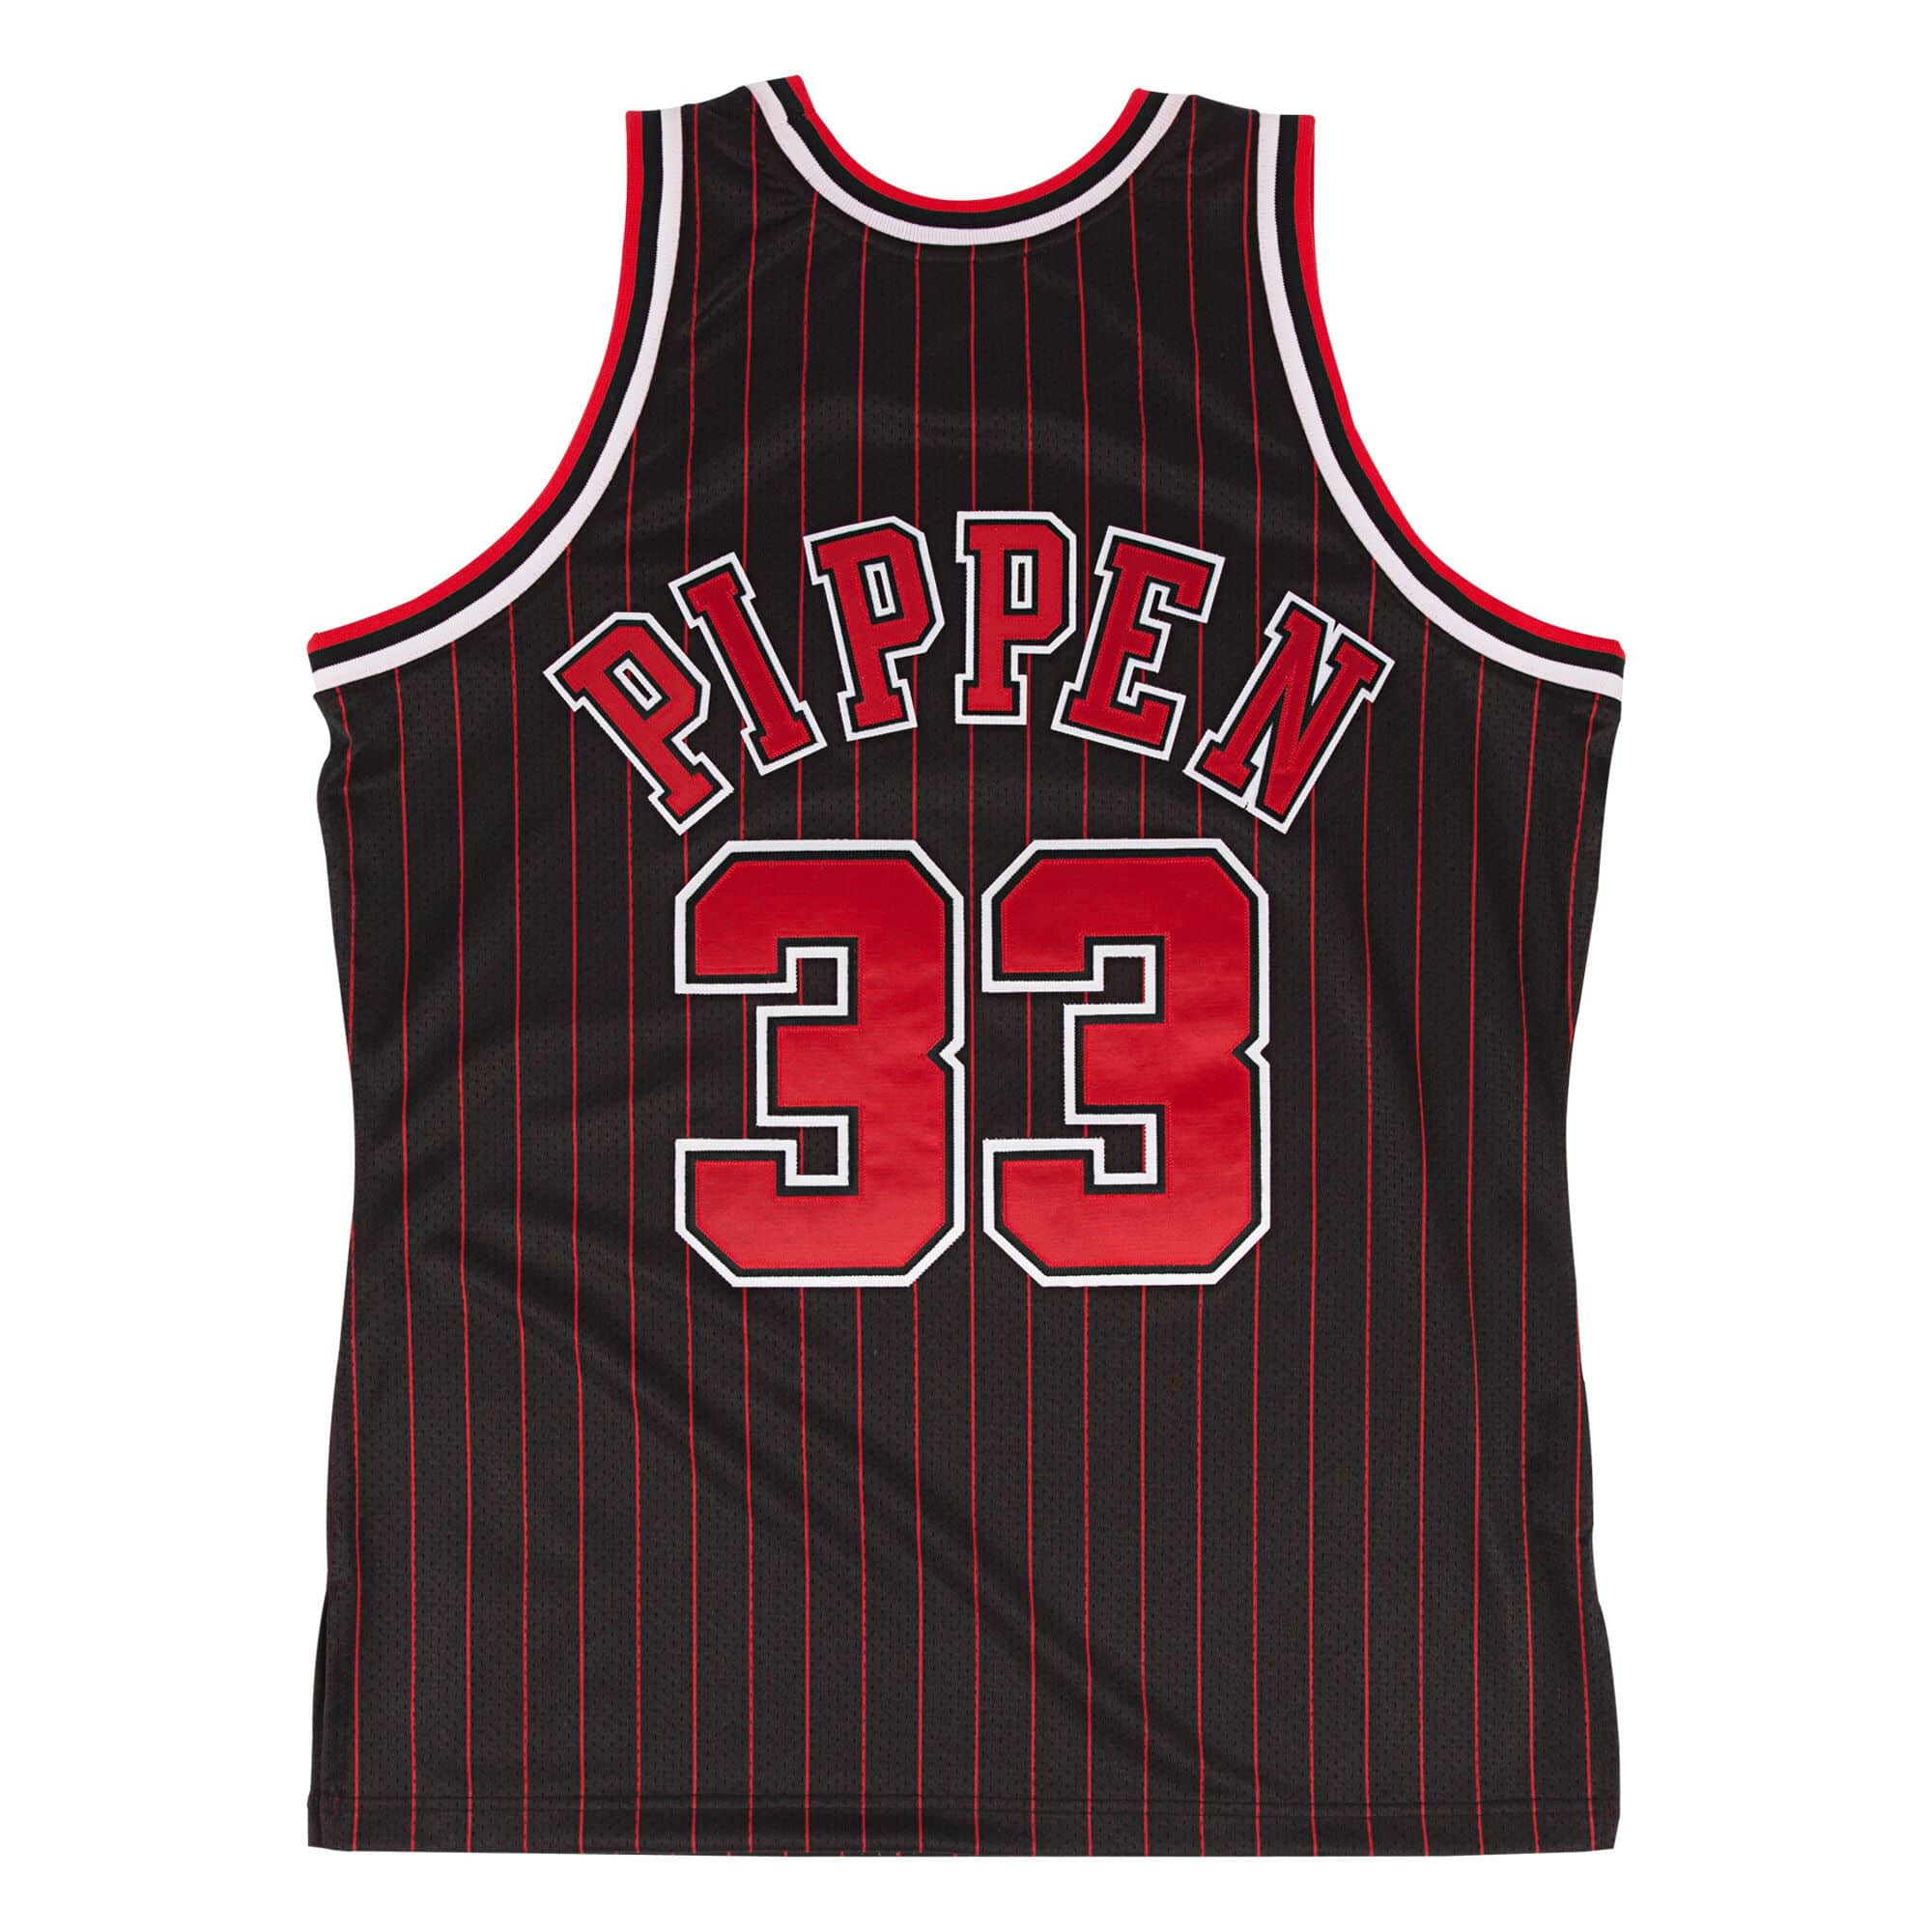 Scottie Pippen 1995-96 Authentic Jersey Chicago Bulls